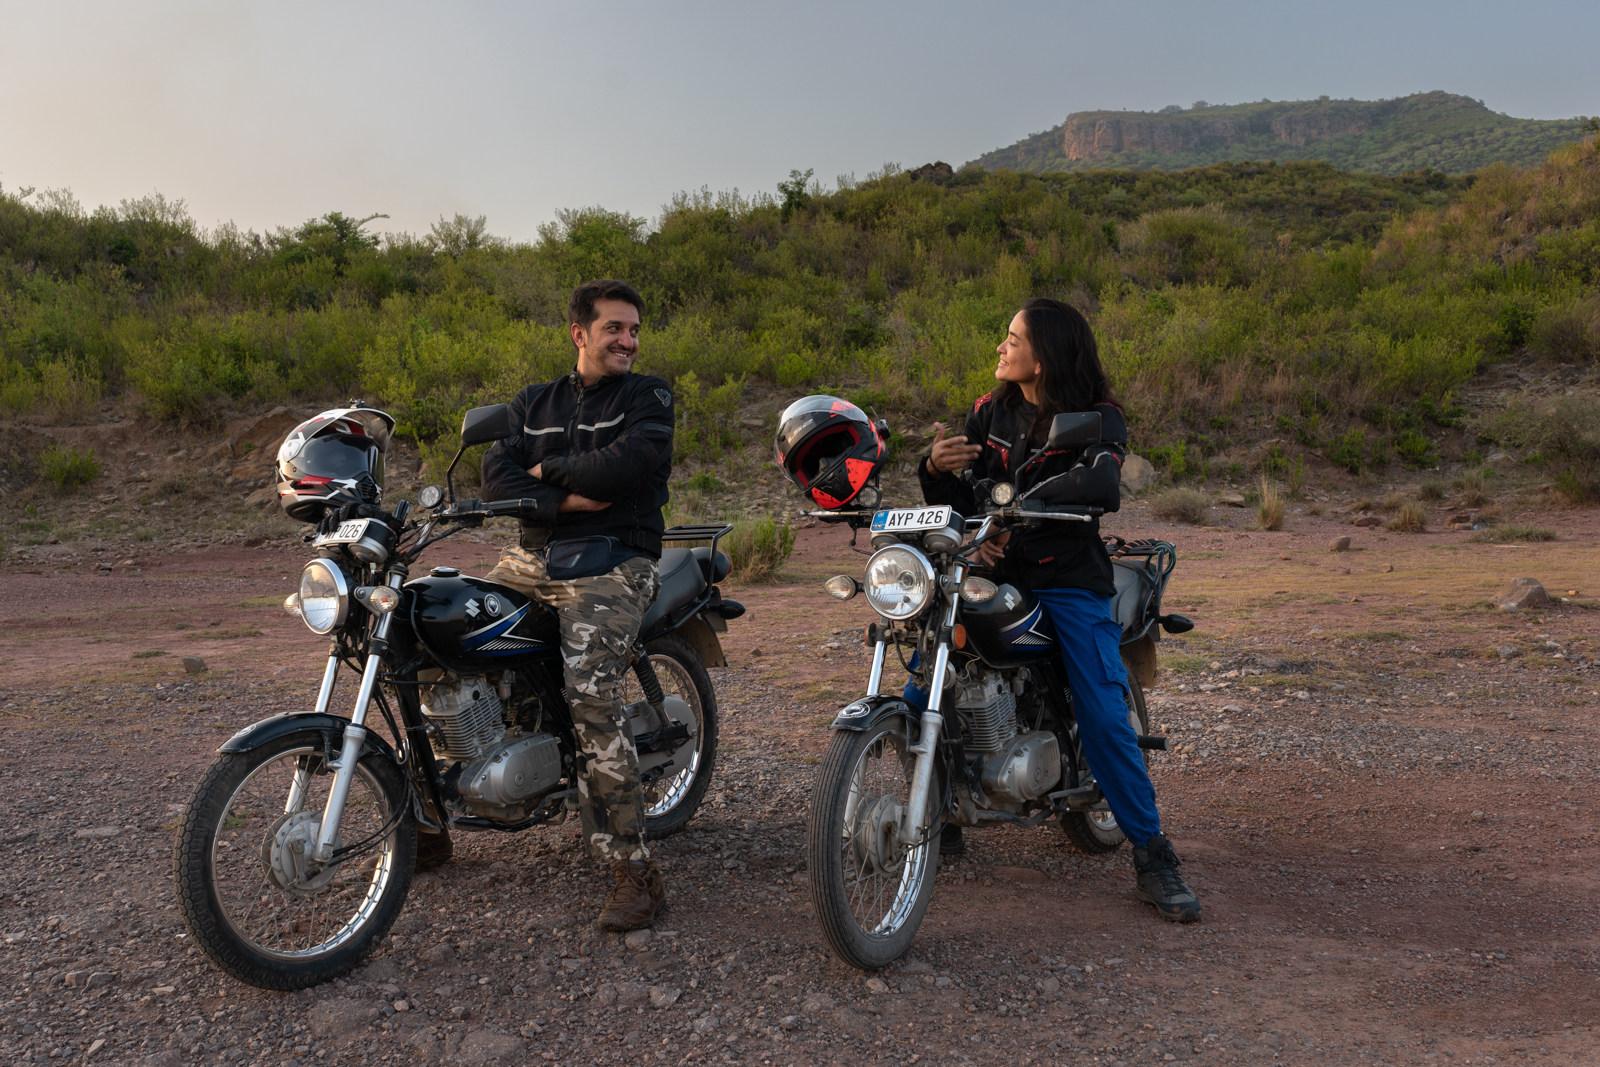 Pakistan adventure motorcycle tour leaders Sana and Alex